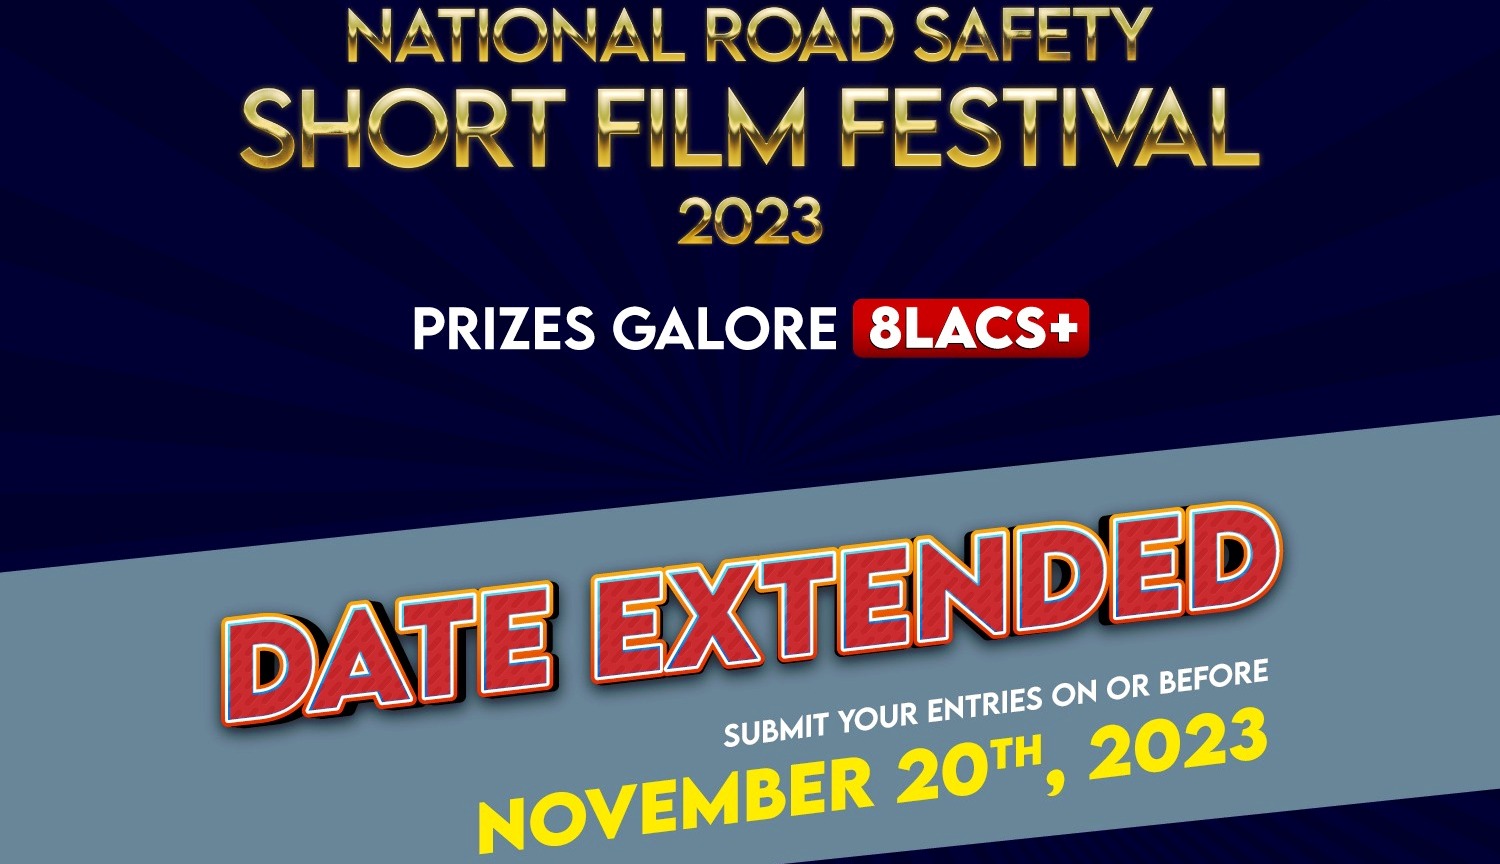 National Road Safety Short Film Festival 2023